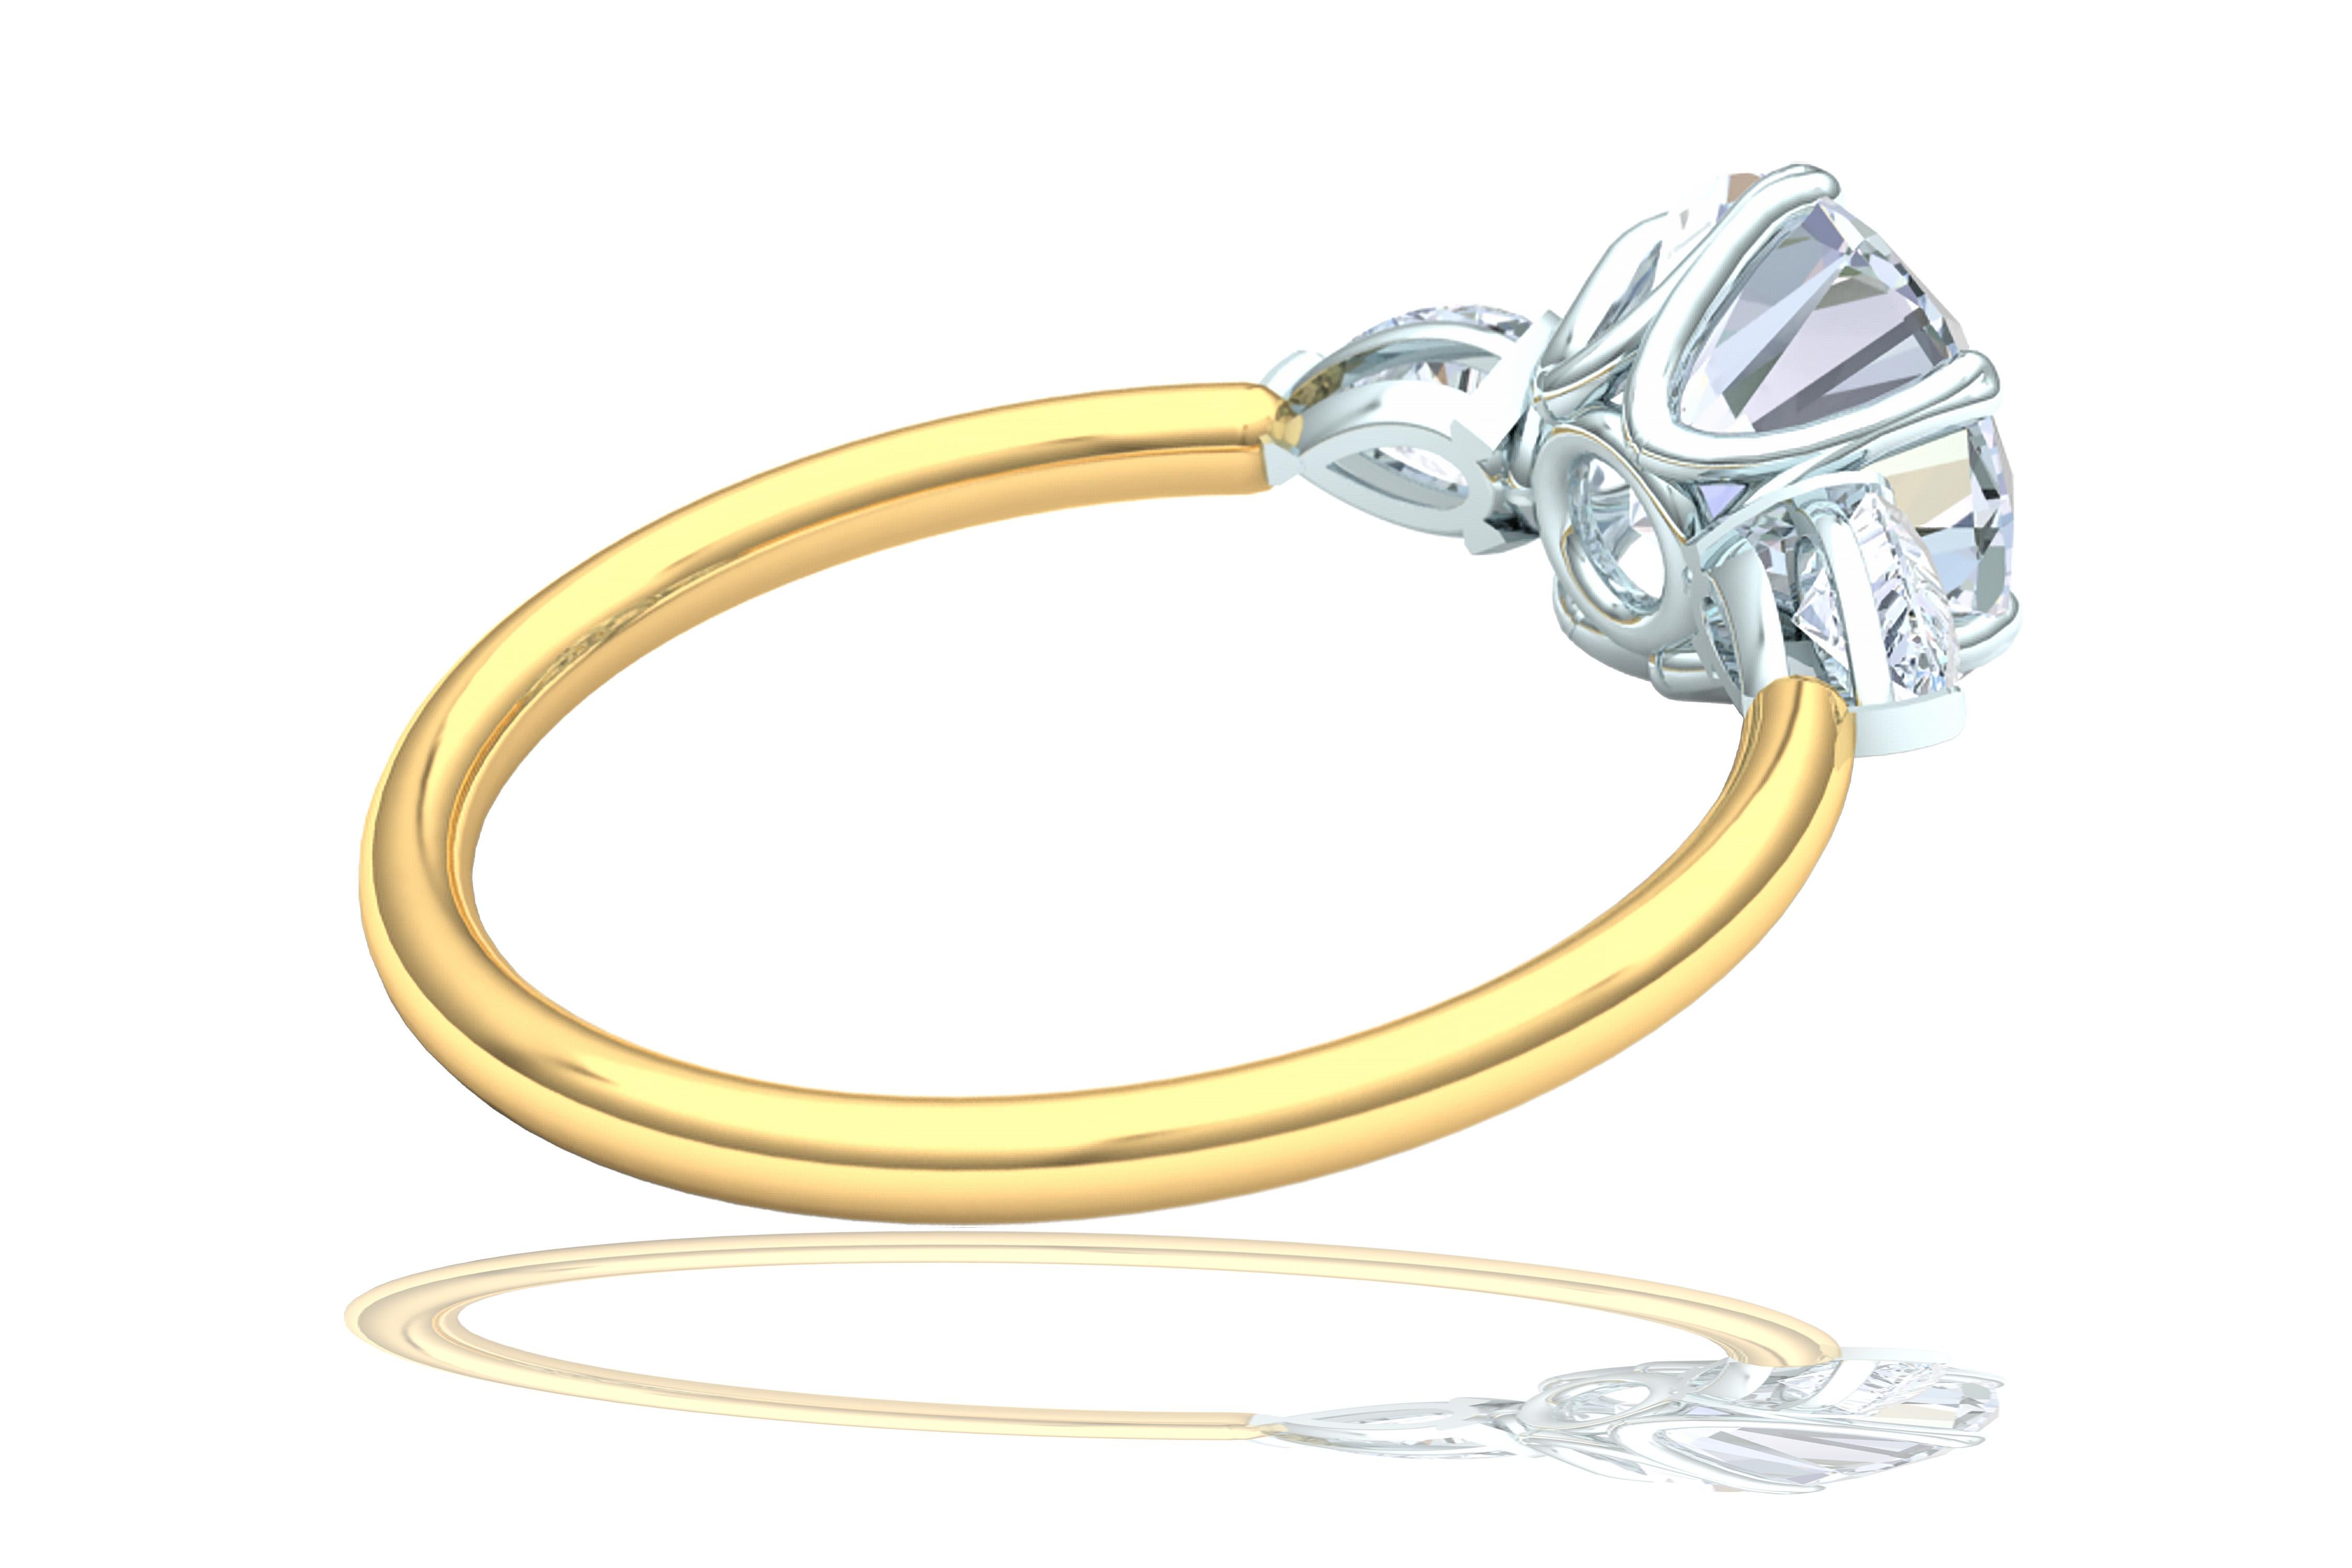 1.6 carat diamond engagement ring